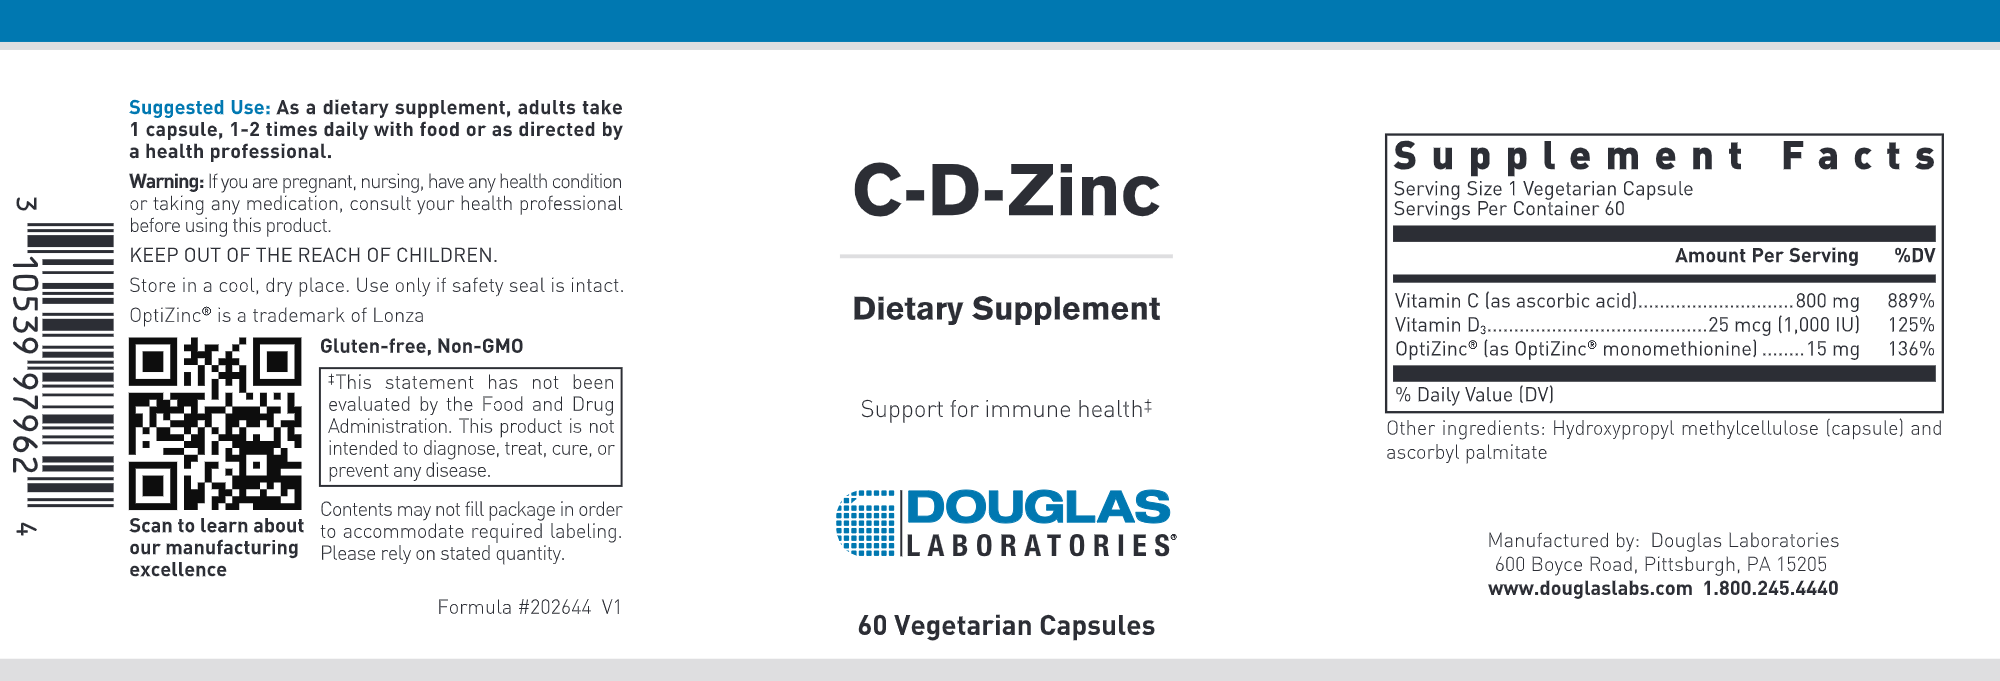 C-D-Zinc 120 Vegetarian Capsules